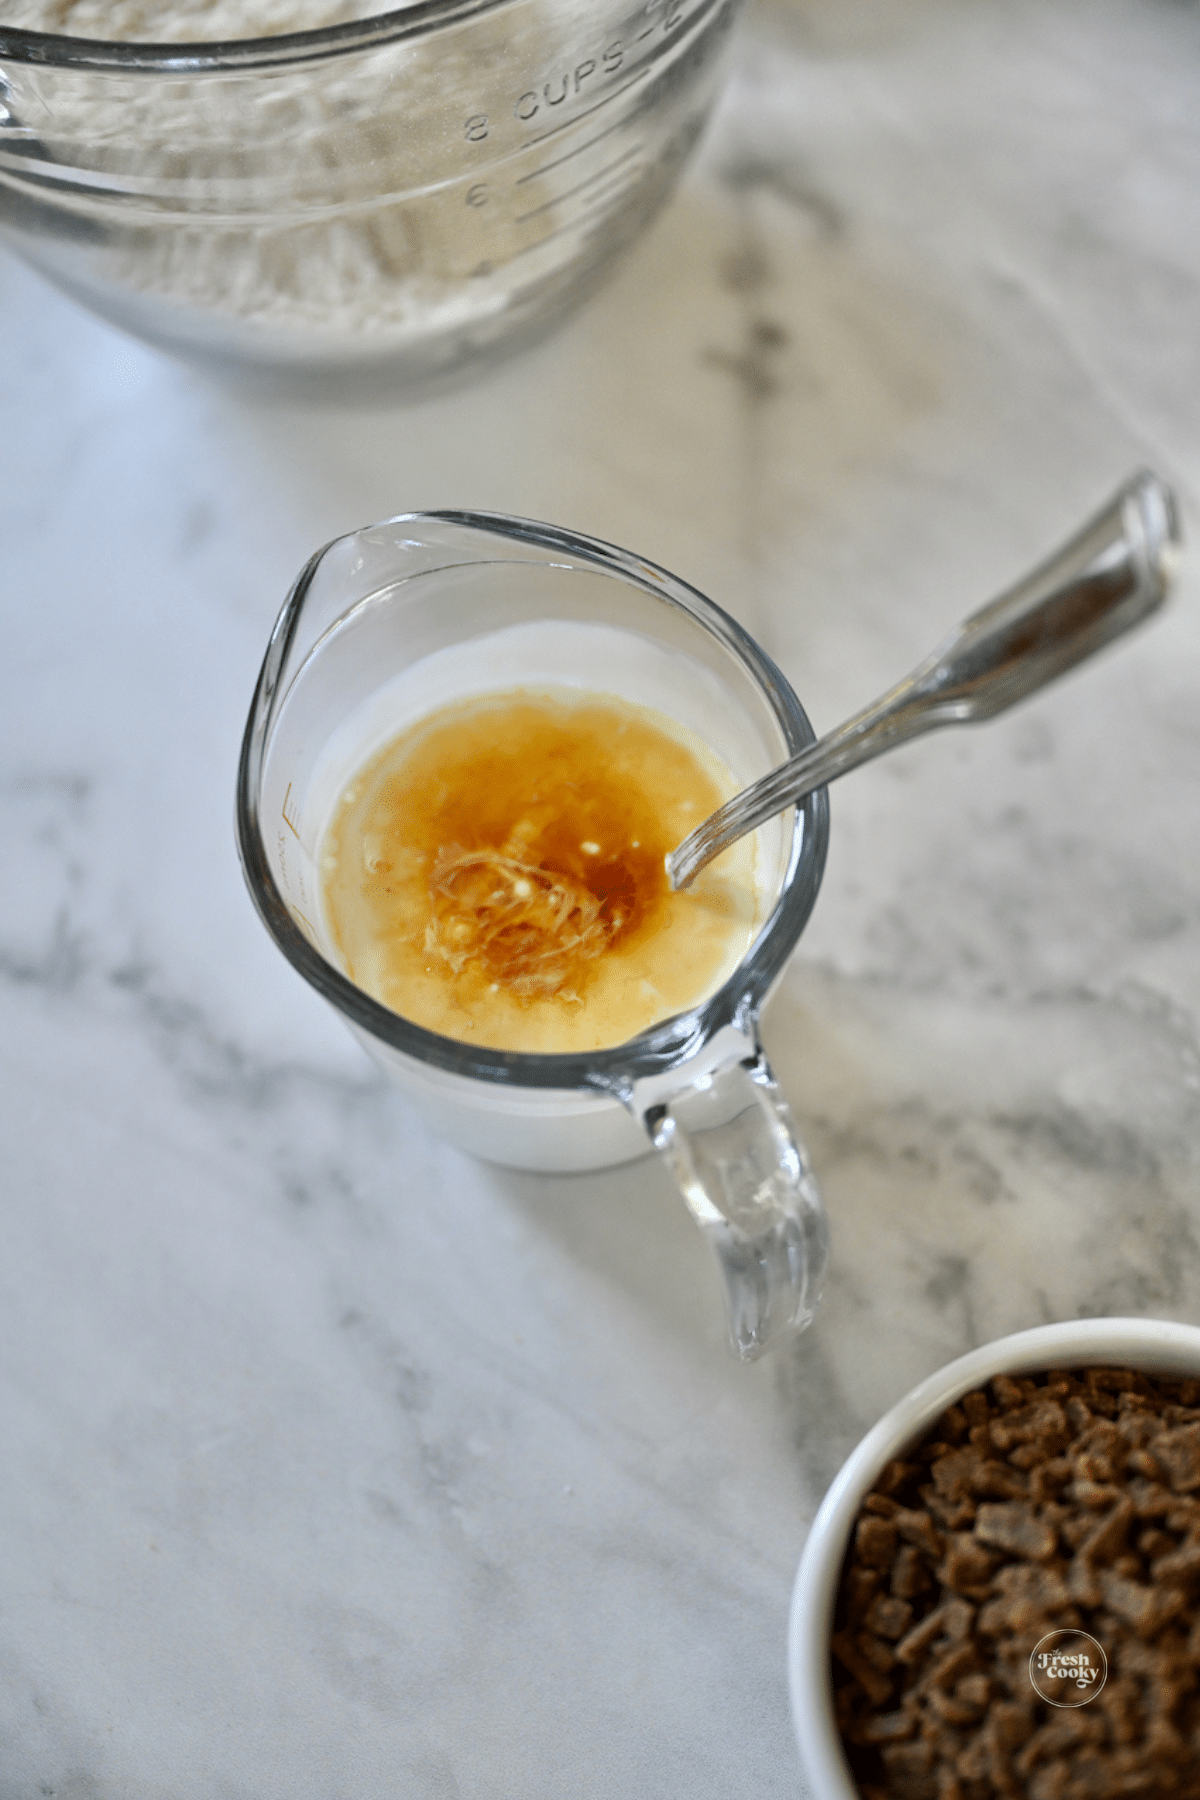 Stirring in vanilla extract to cream mixture.